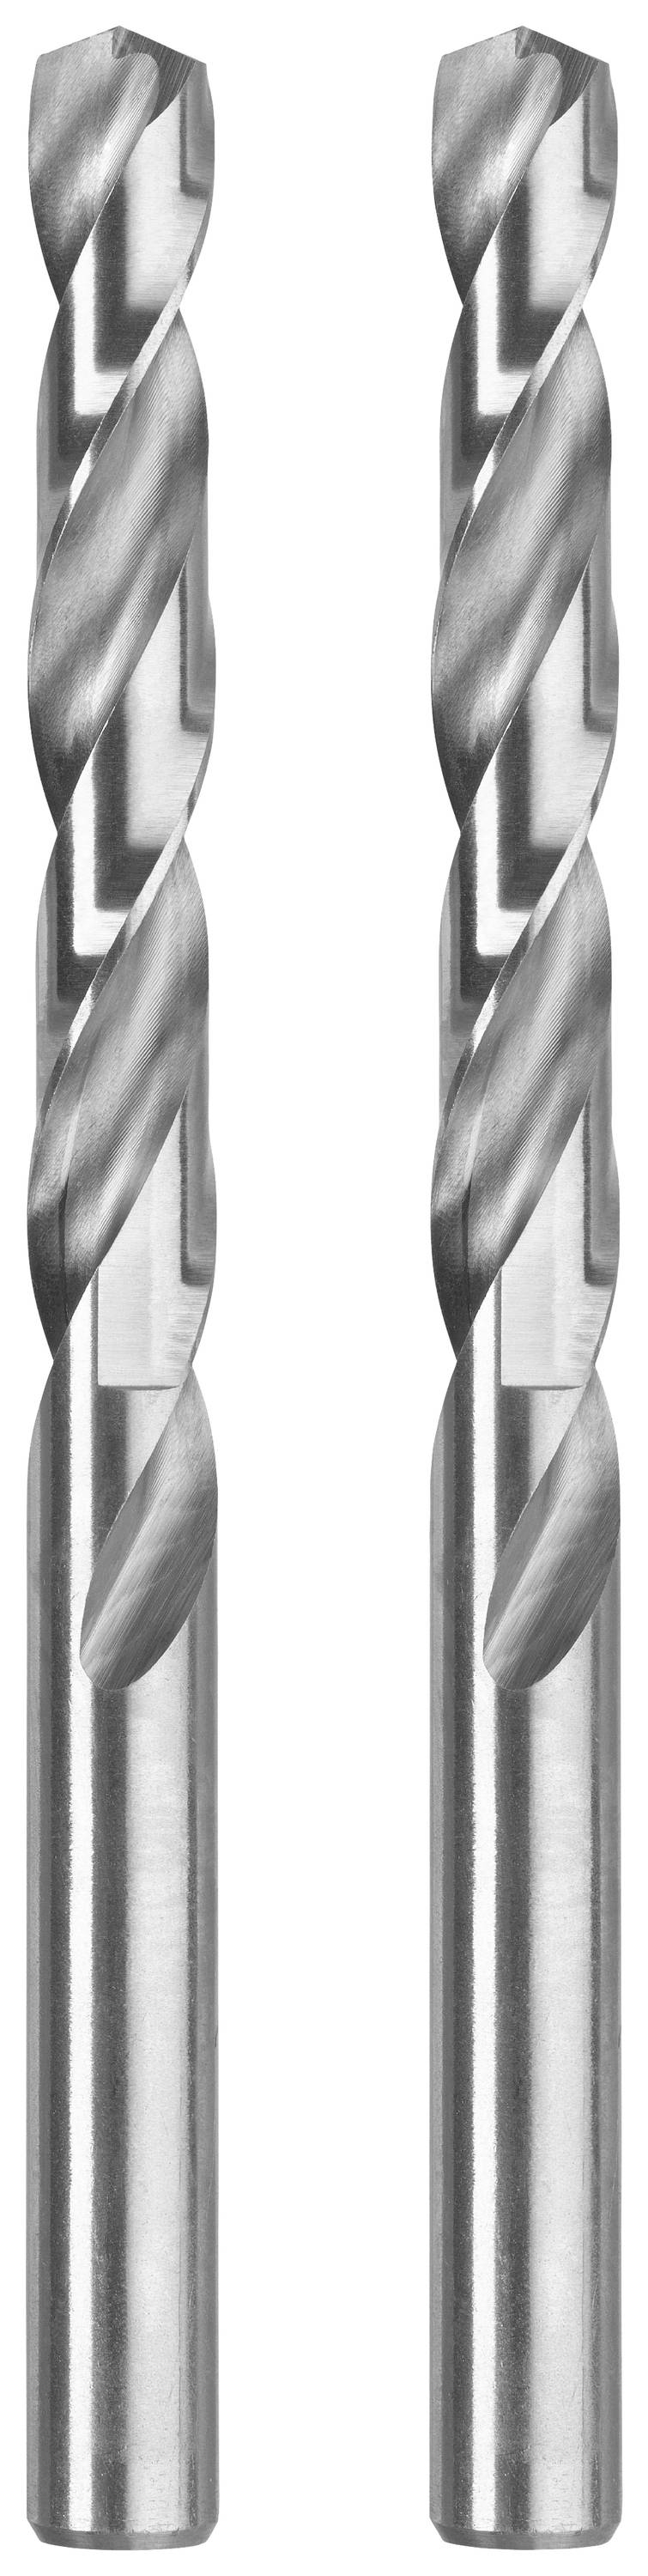 KWB 206515 Metall-Spiralbohrer 1.5 mm 1 St.